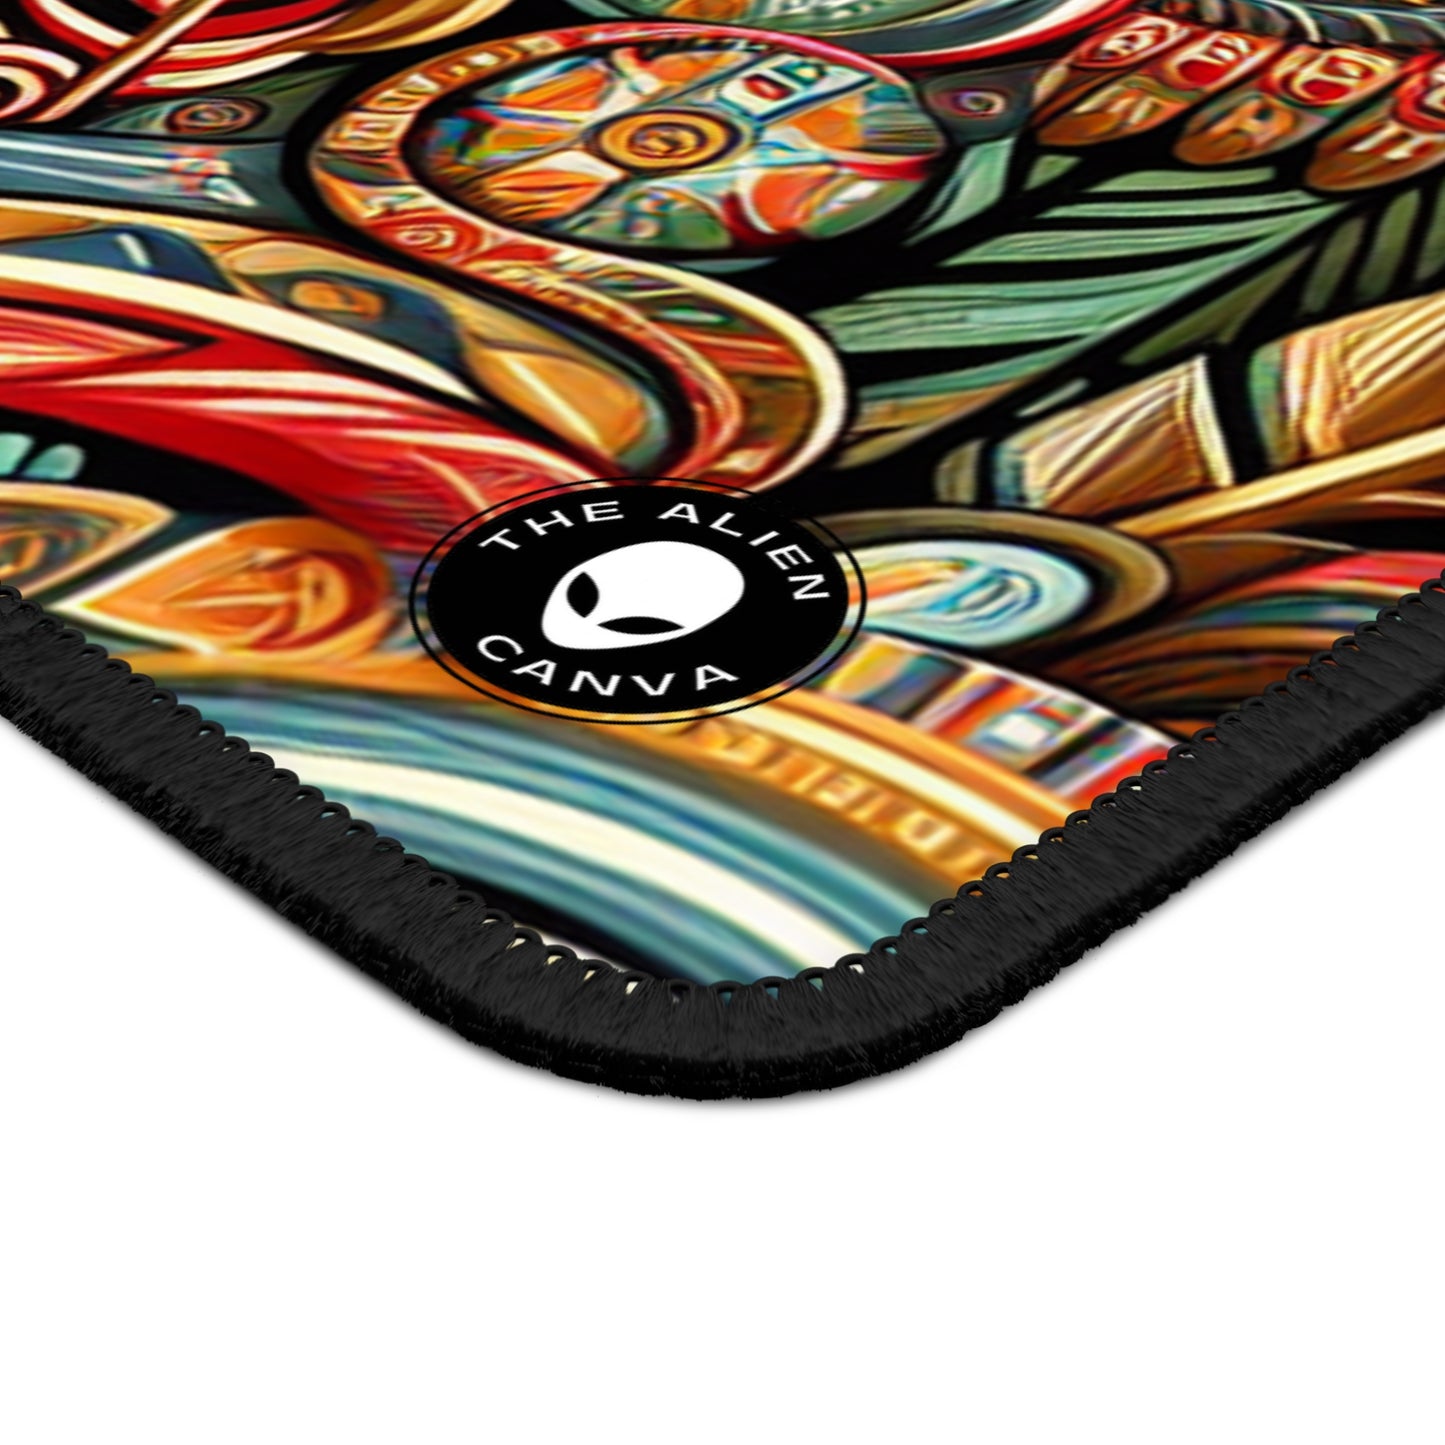 "Sacred Southwest: A Celebration of Indigenous Art" - The Alien Gaming Mouse Pad Indigenous Art